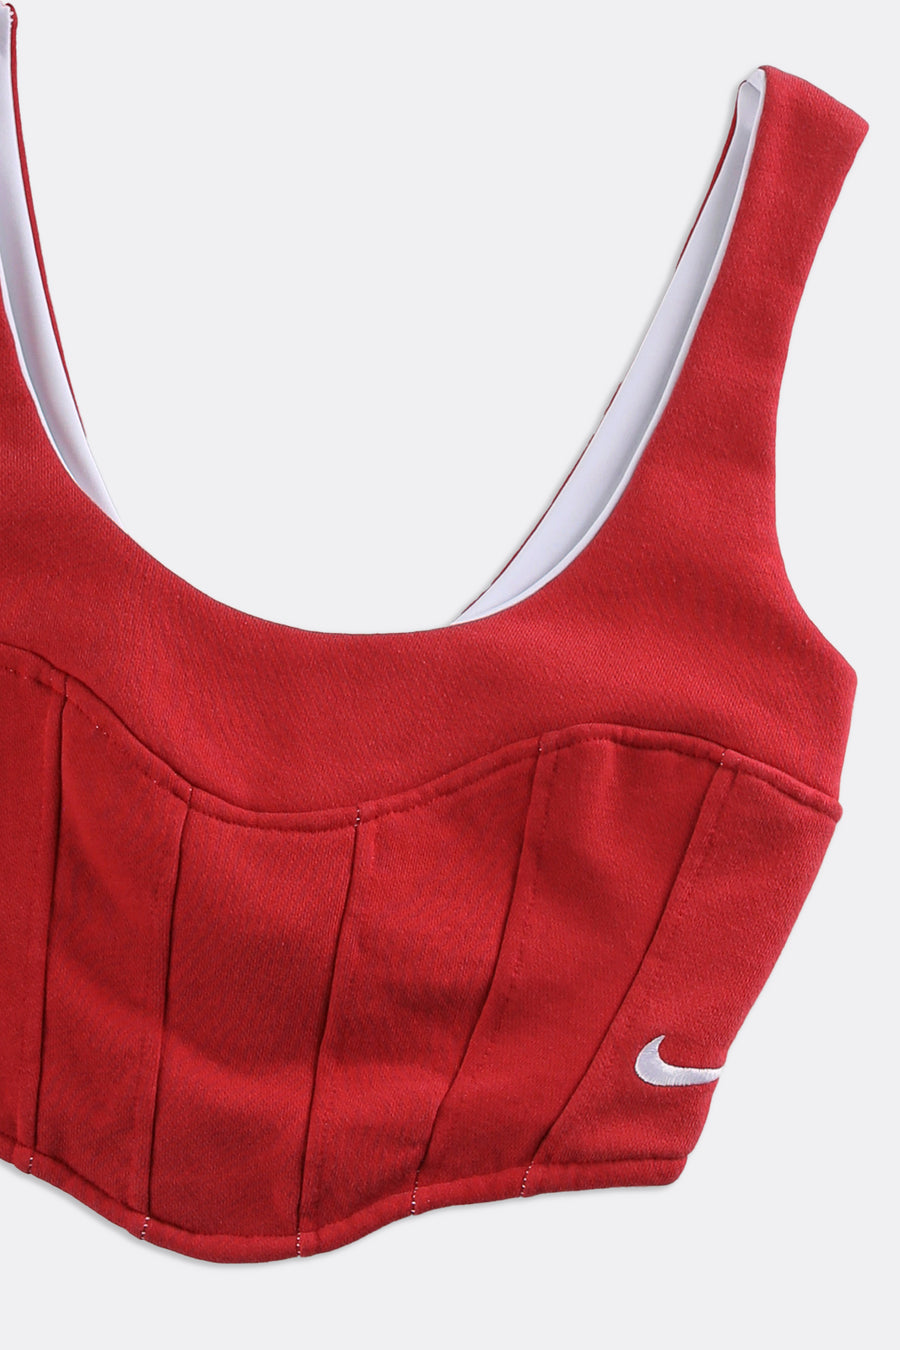 Rework Nike Sweatshirt Bustier - XS, S, M, L, XL, 2XL – Frankie Collective